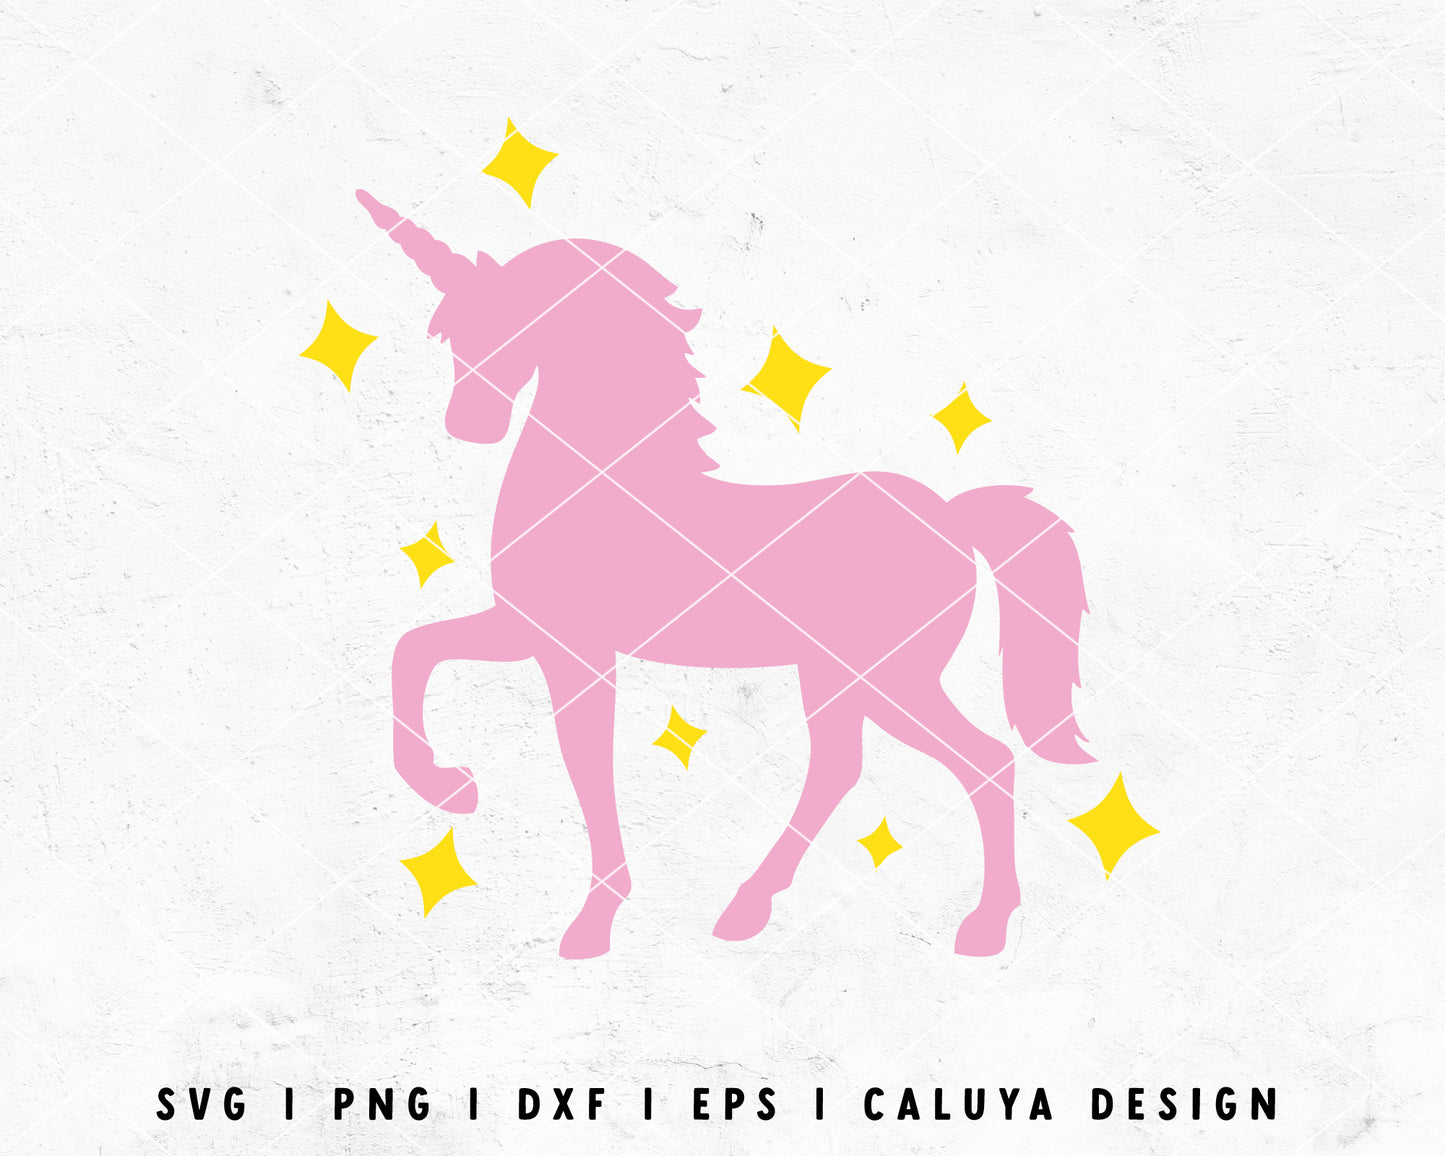 FREE Unicorn SVG | Unicorn Silhouette SVG Cut File for Cricut, Cameo Silhouette | Free SVG Cut File